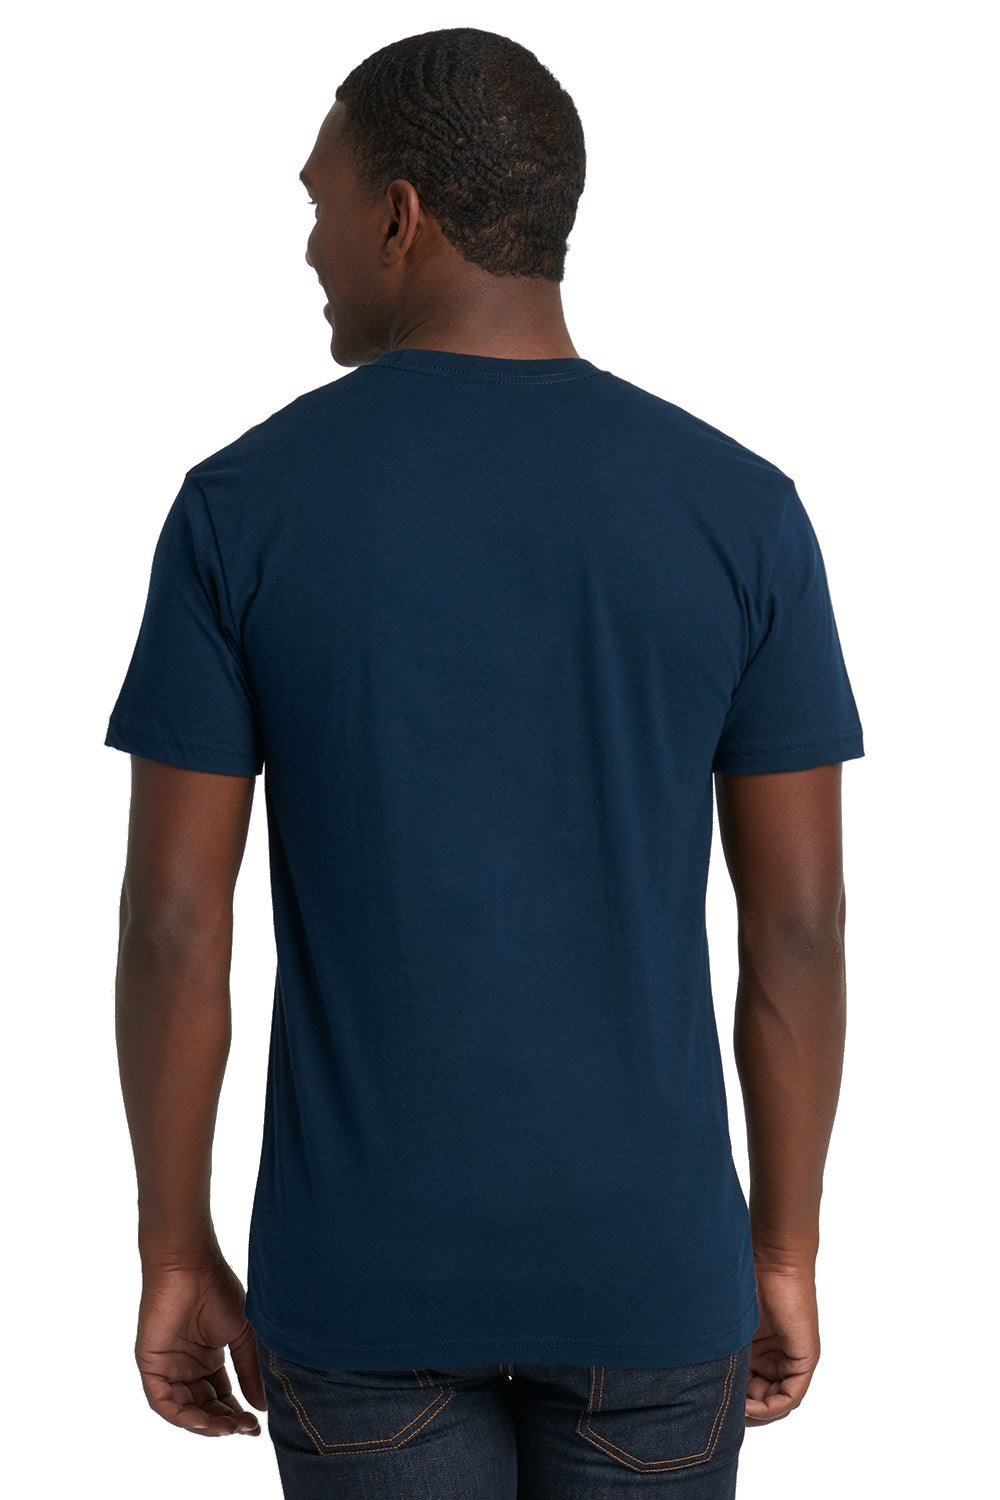 Next Level 3600 Mens Fine Jersey Short Sleeve Crewneck T-Shirt Navy Blue Back